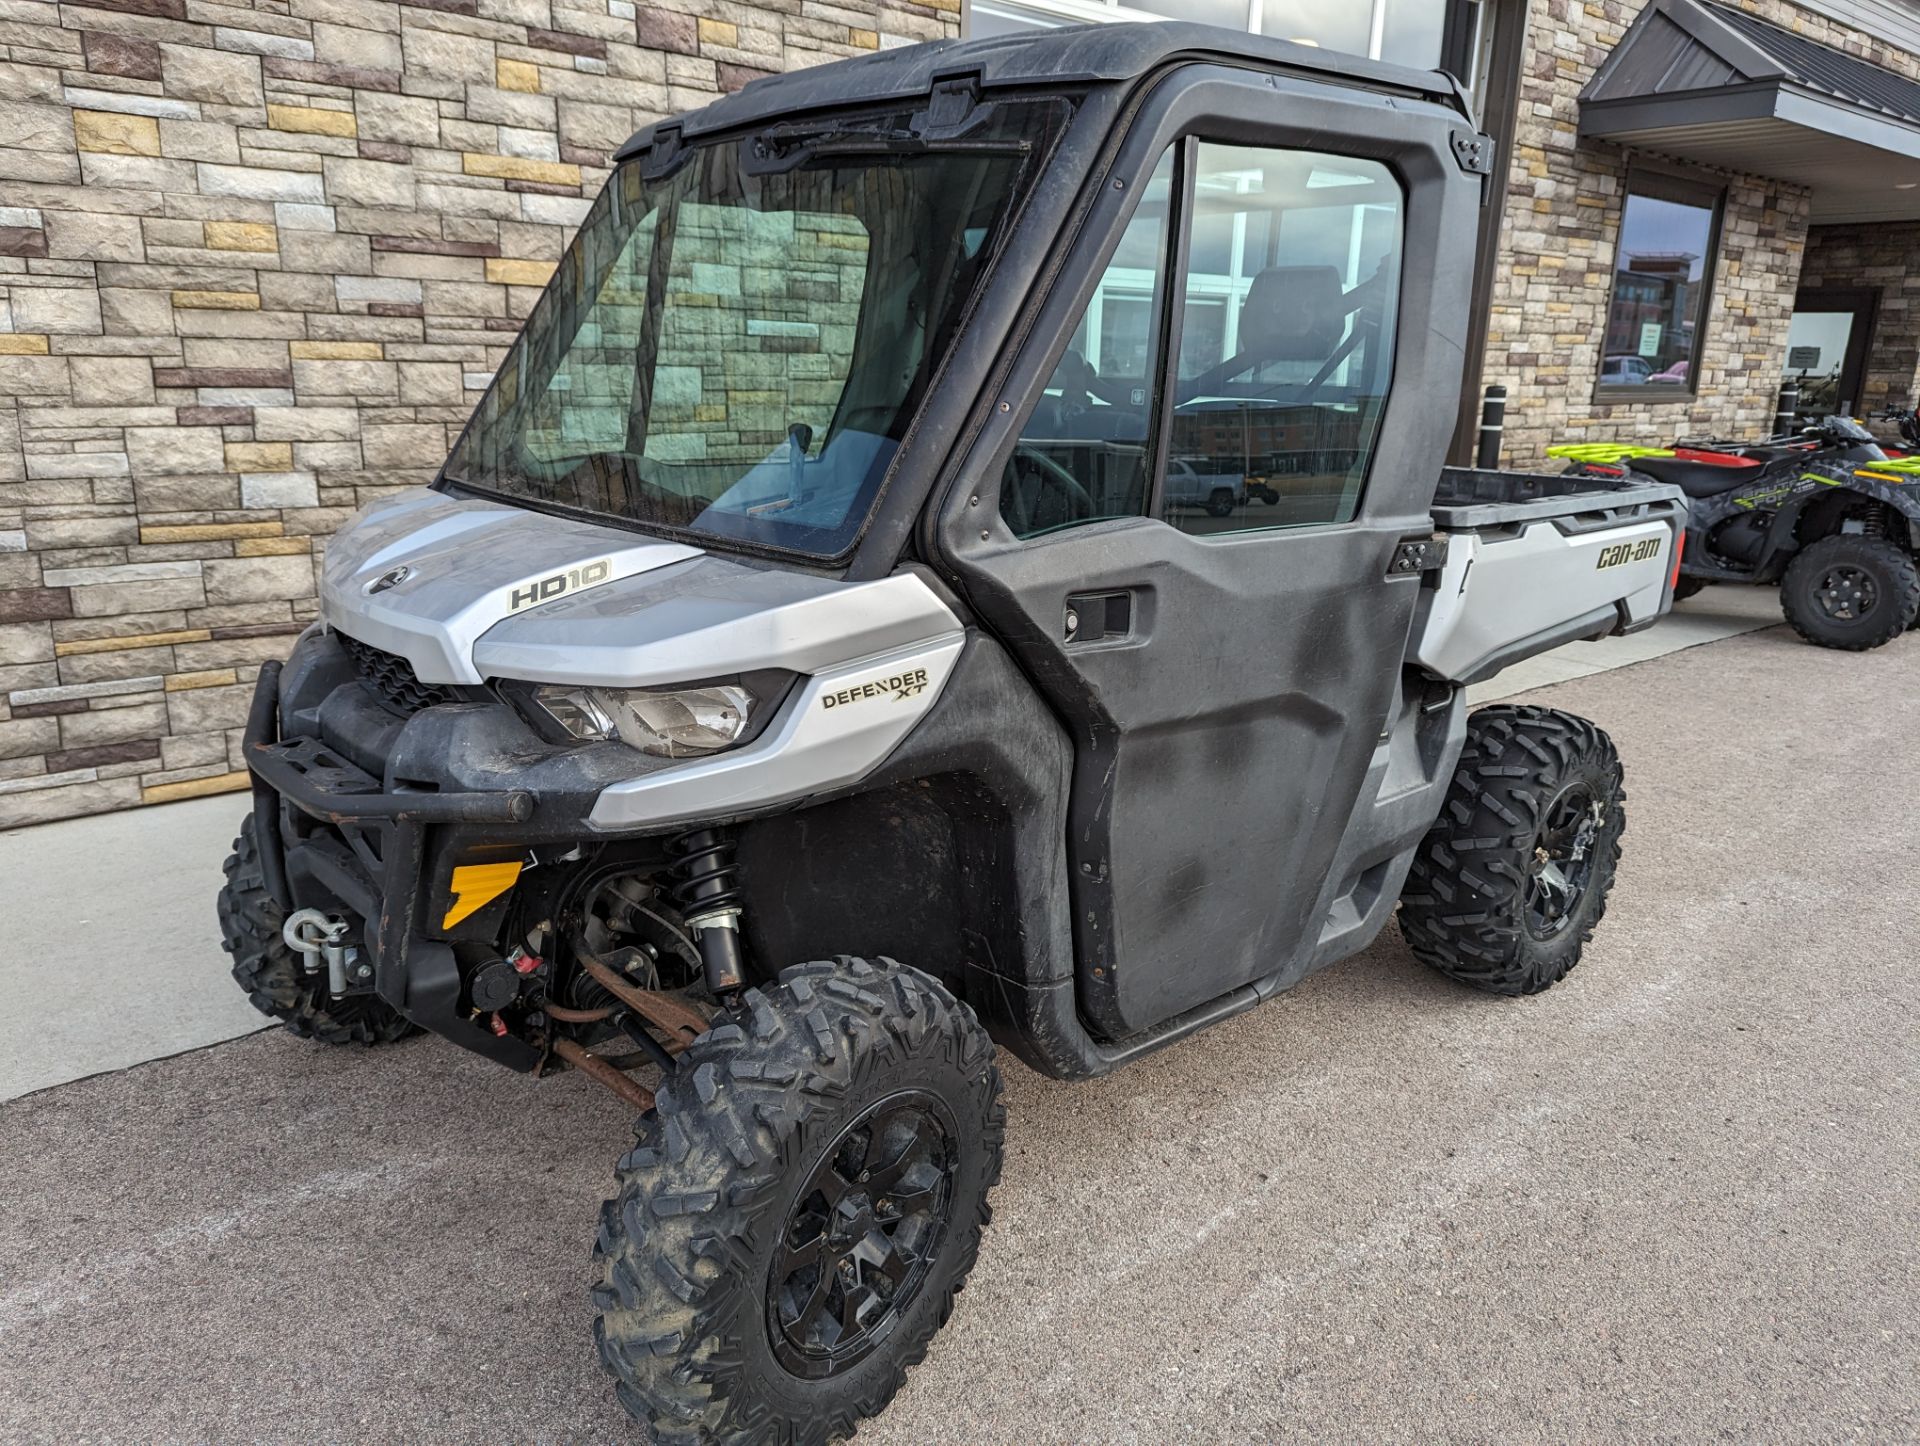 2019 Can-Am Defender XT CAB HD10 in Rapid City, South Dakota - Photo 1